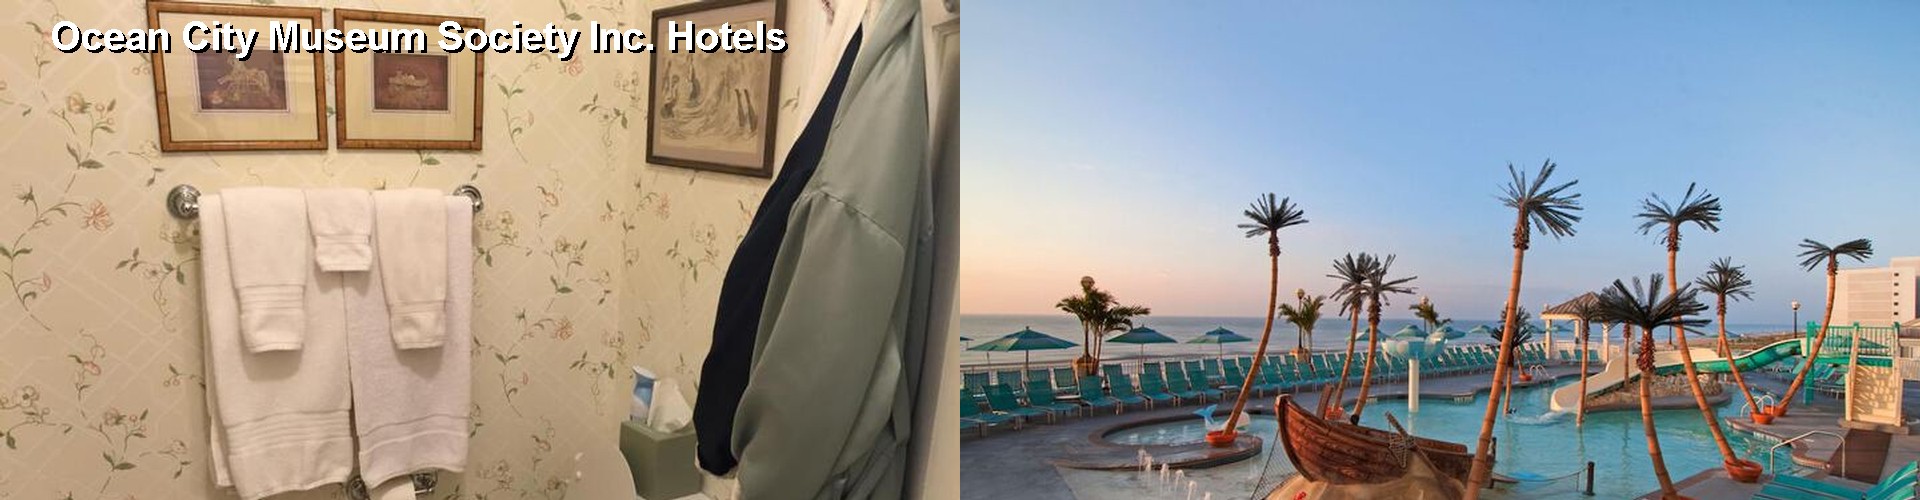 2 Best Hotels near Ocean City Museum Society Inc.